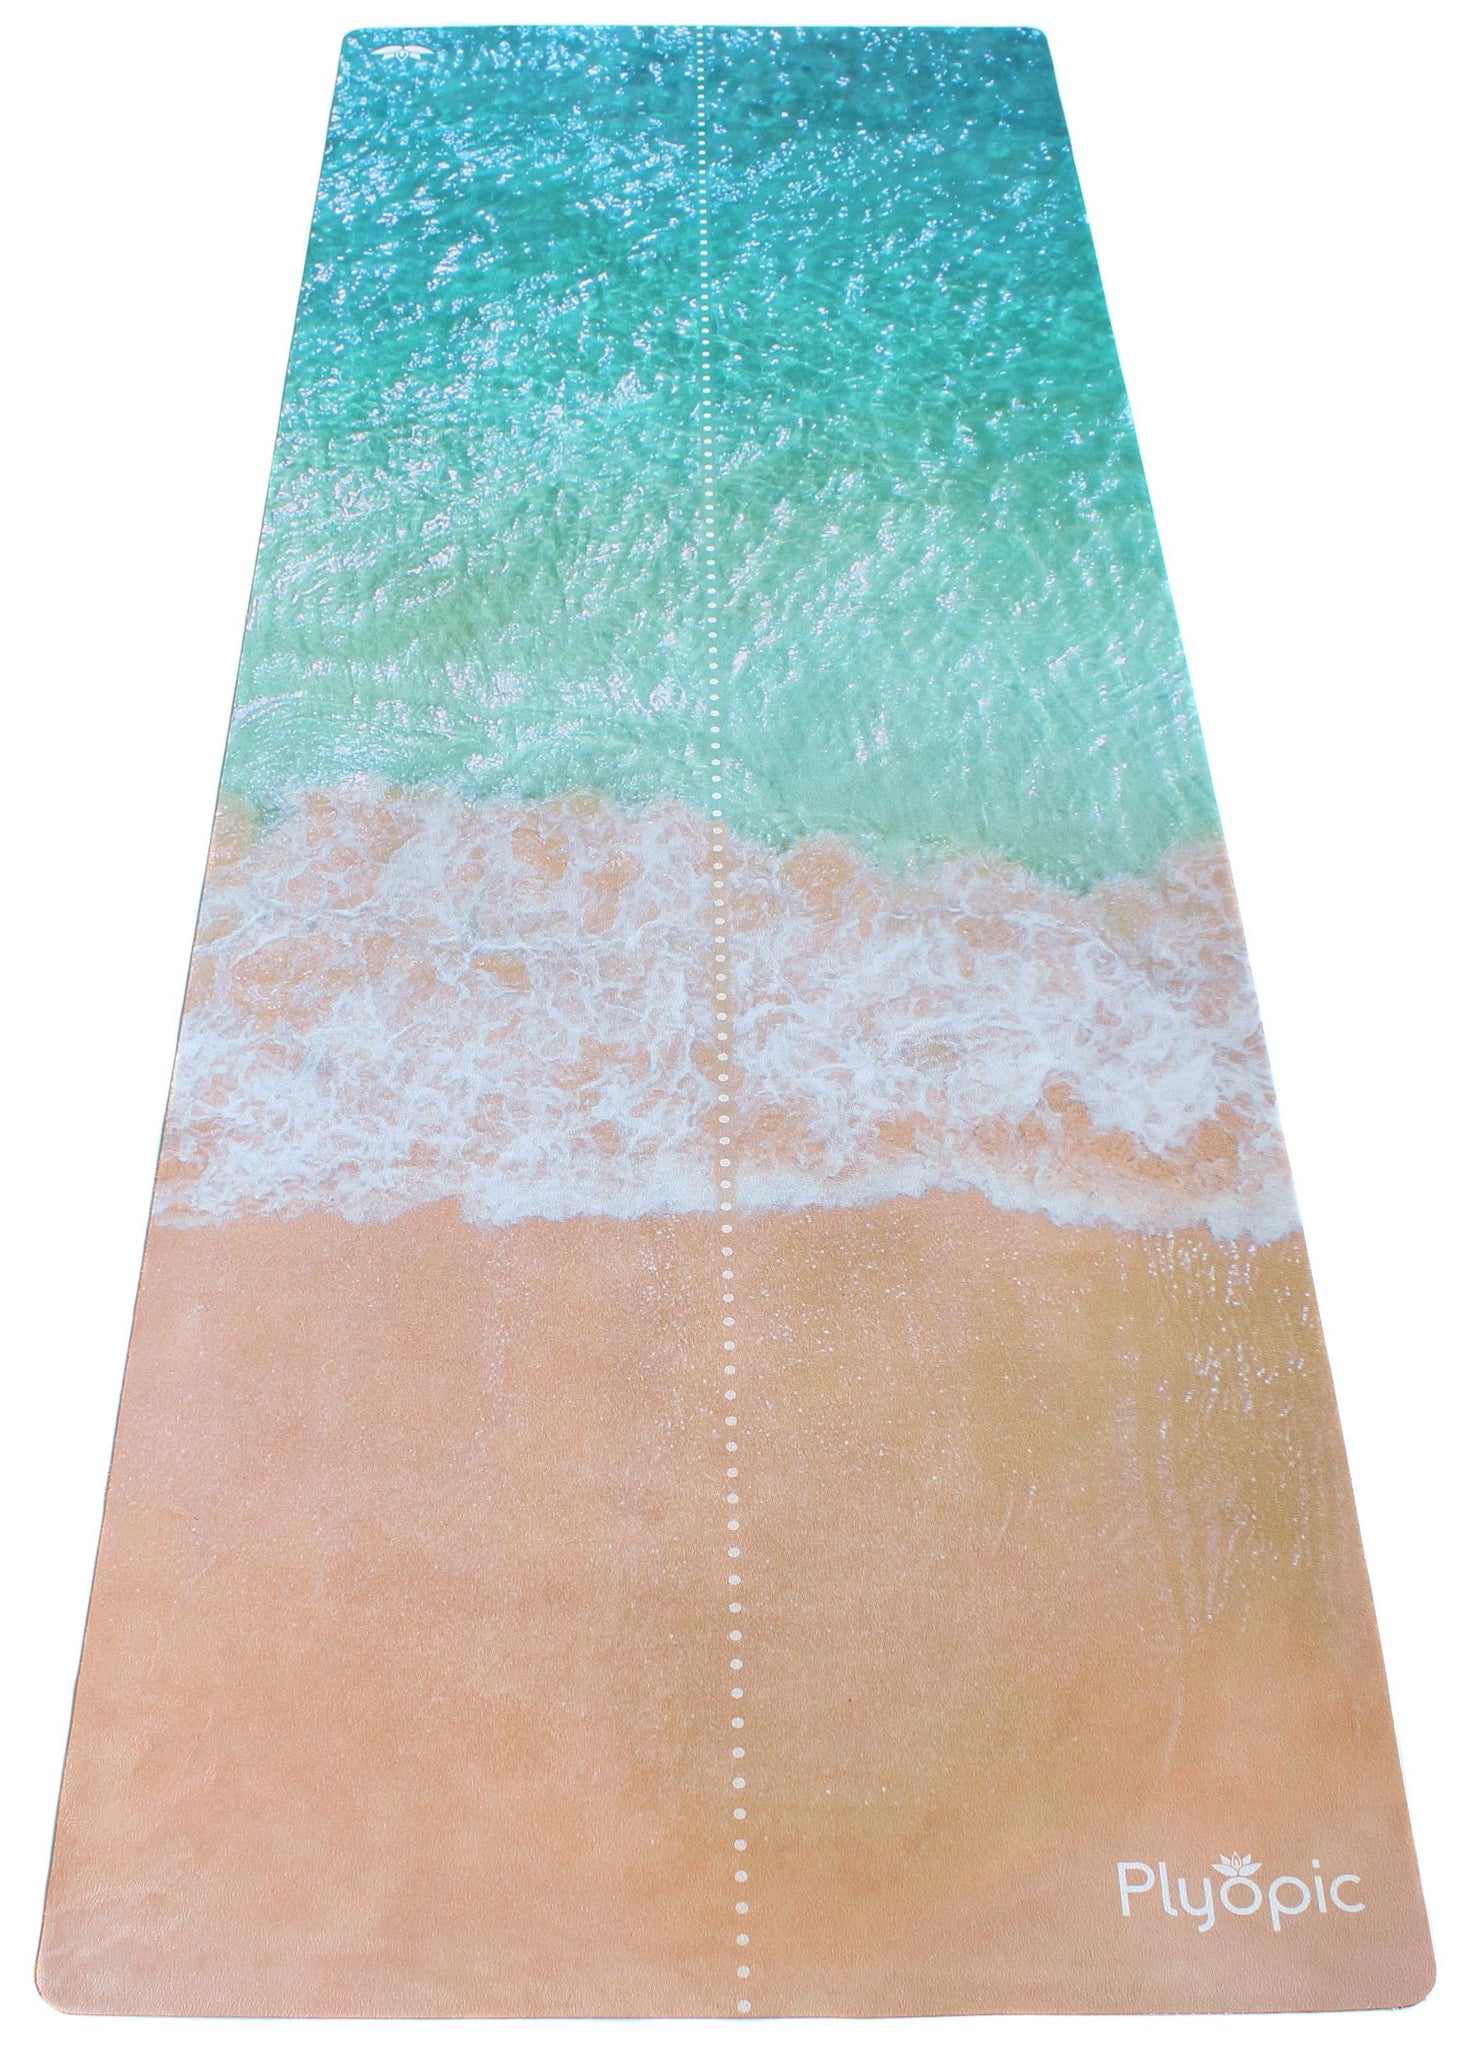 Yoga Blanket Mat Sized Active Dry Non-slip Travel Beach Towel